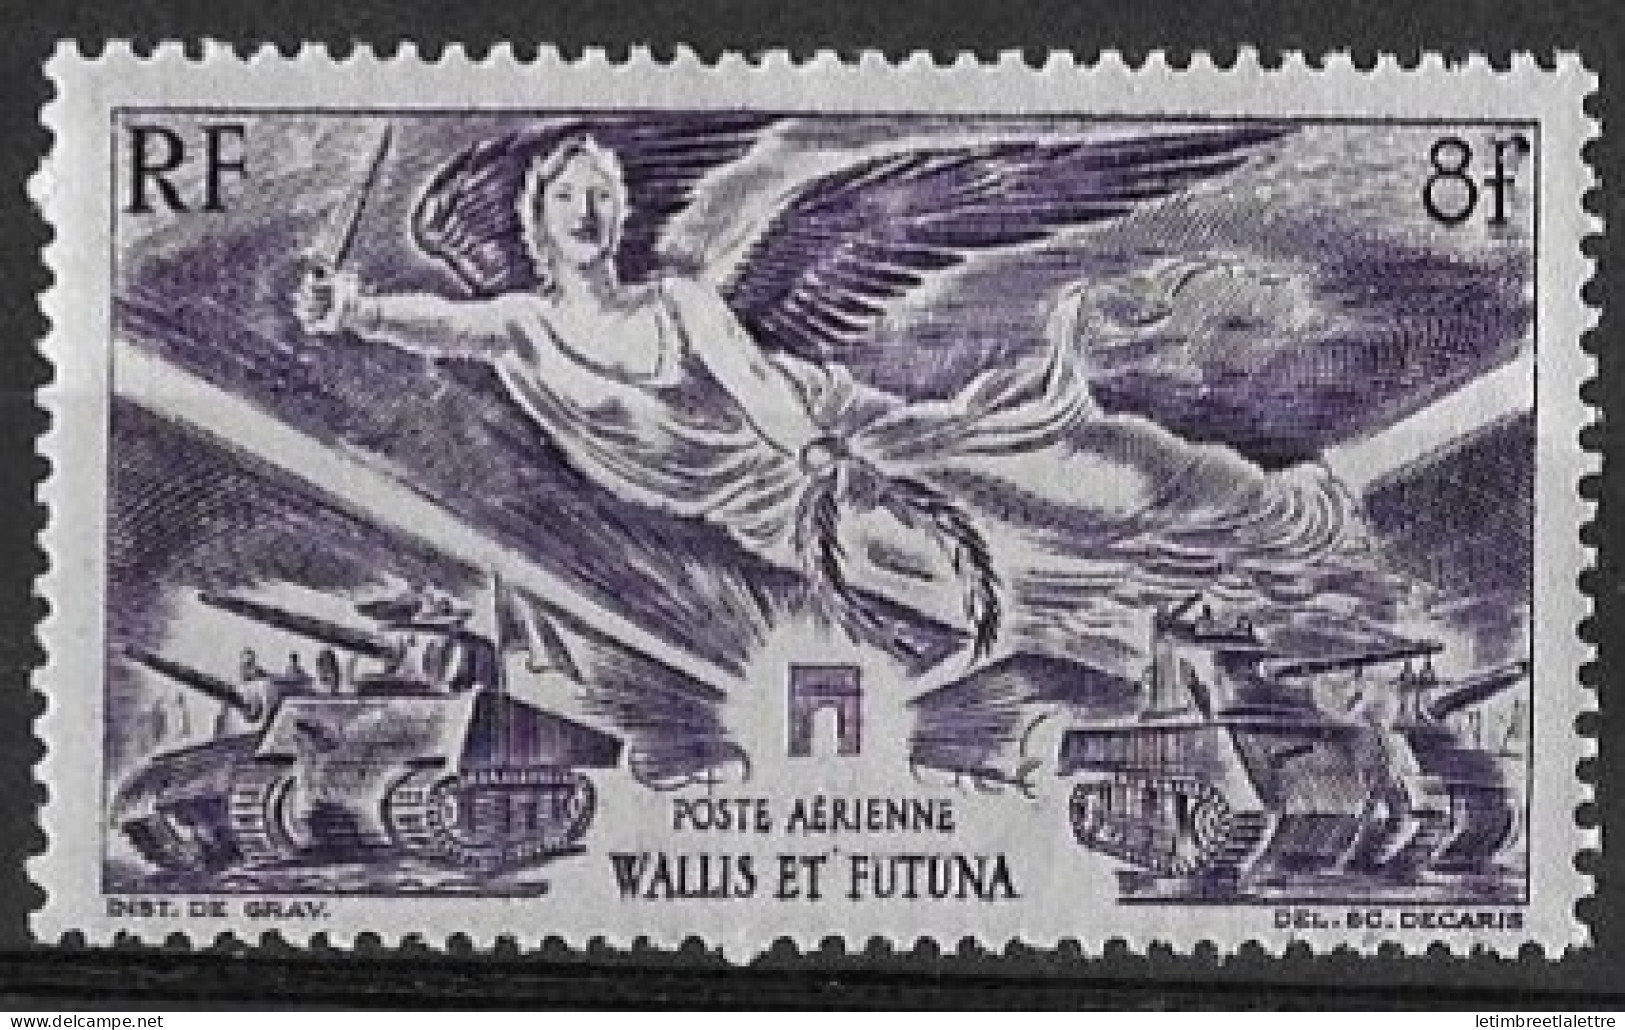 Wallis Et Futuna - Poste Aérienne - YT N° 4 ** - Neuf Sans Charnière - Nuovi